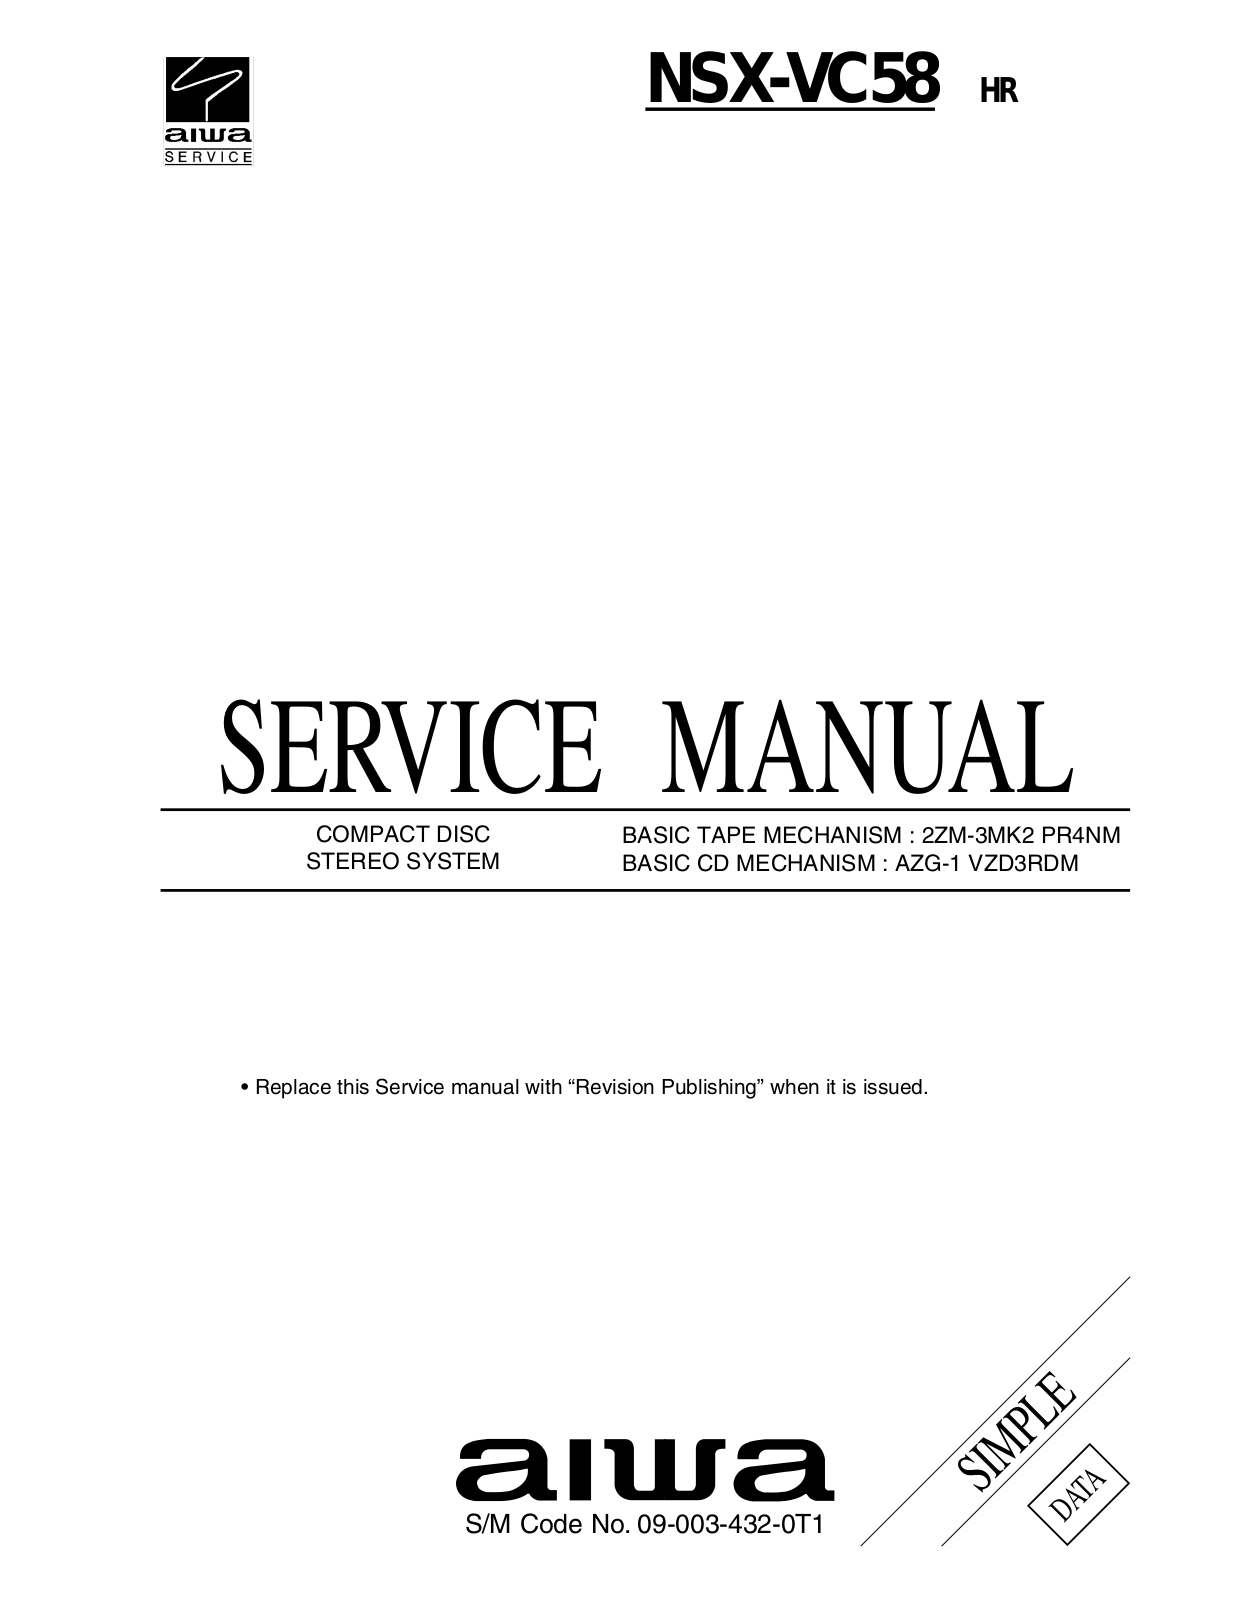 Aiwa NSX-VC58 Service Manual